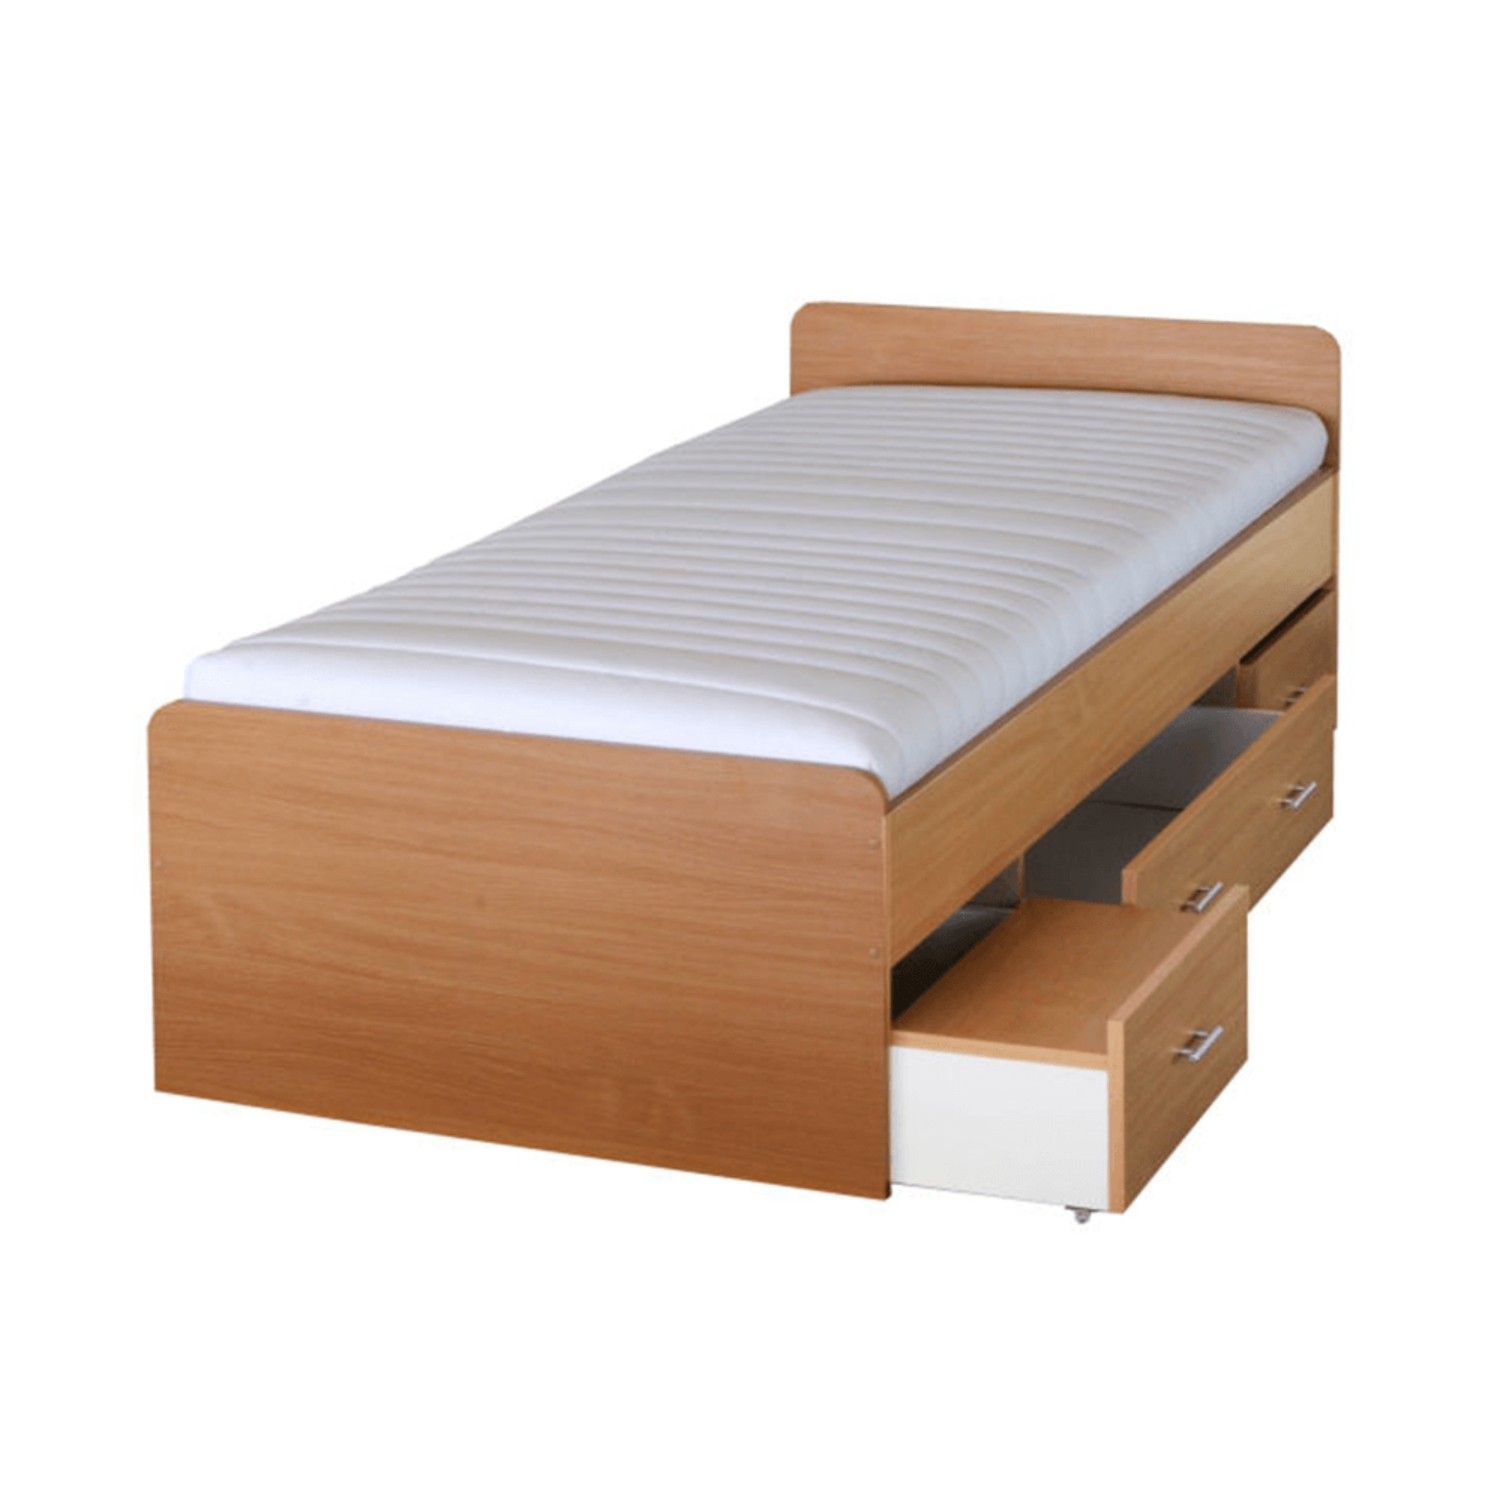 Ágy ágyneműtartóval bükkfa 90x200 cm DUET